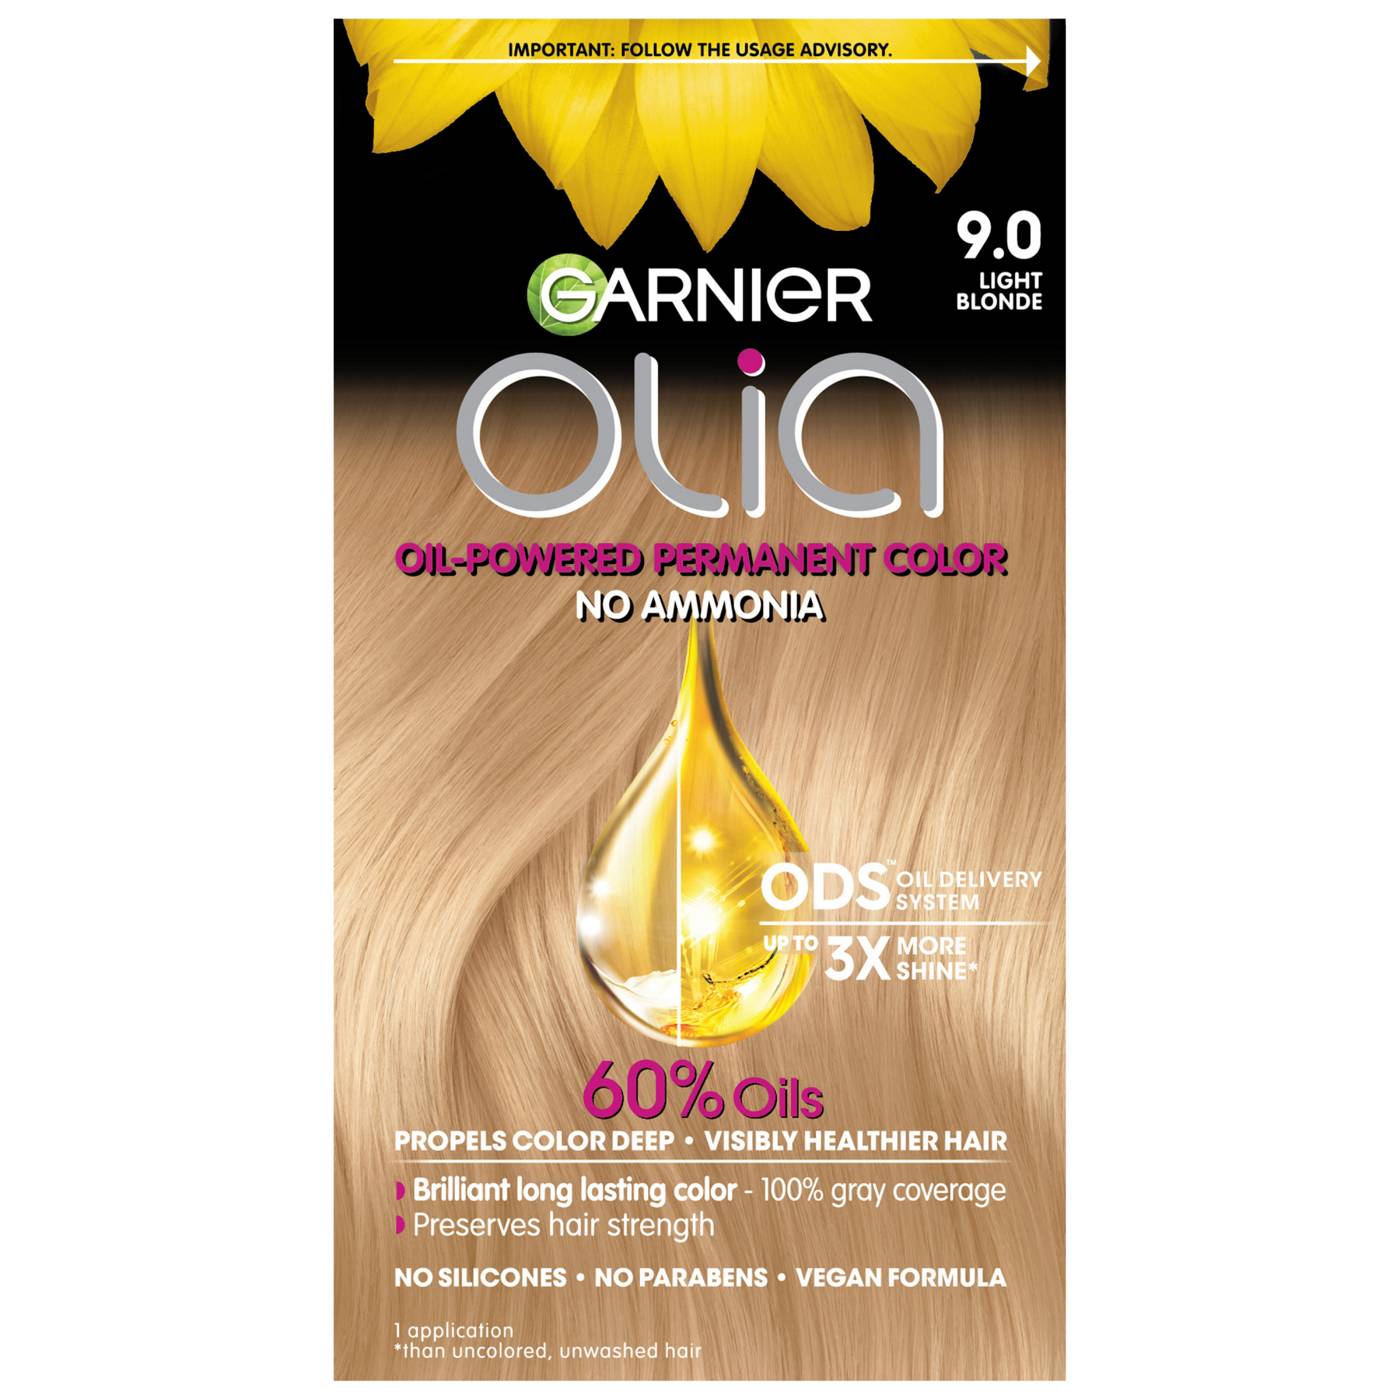 Garnier Olia Oil Powered Ammonia Free Permanent Hair Color 9.0 Light Blonde; image 1 of 14